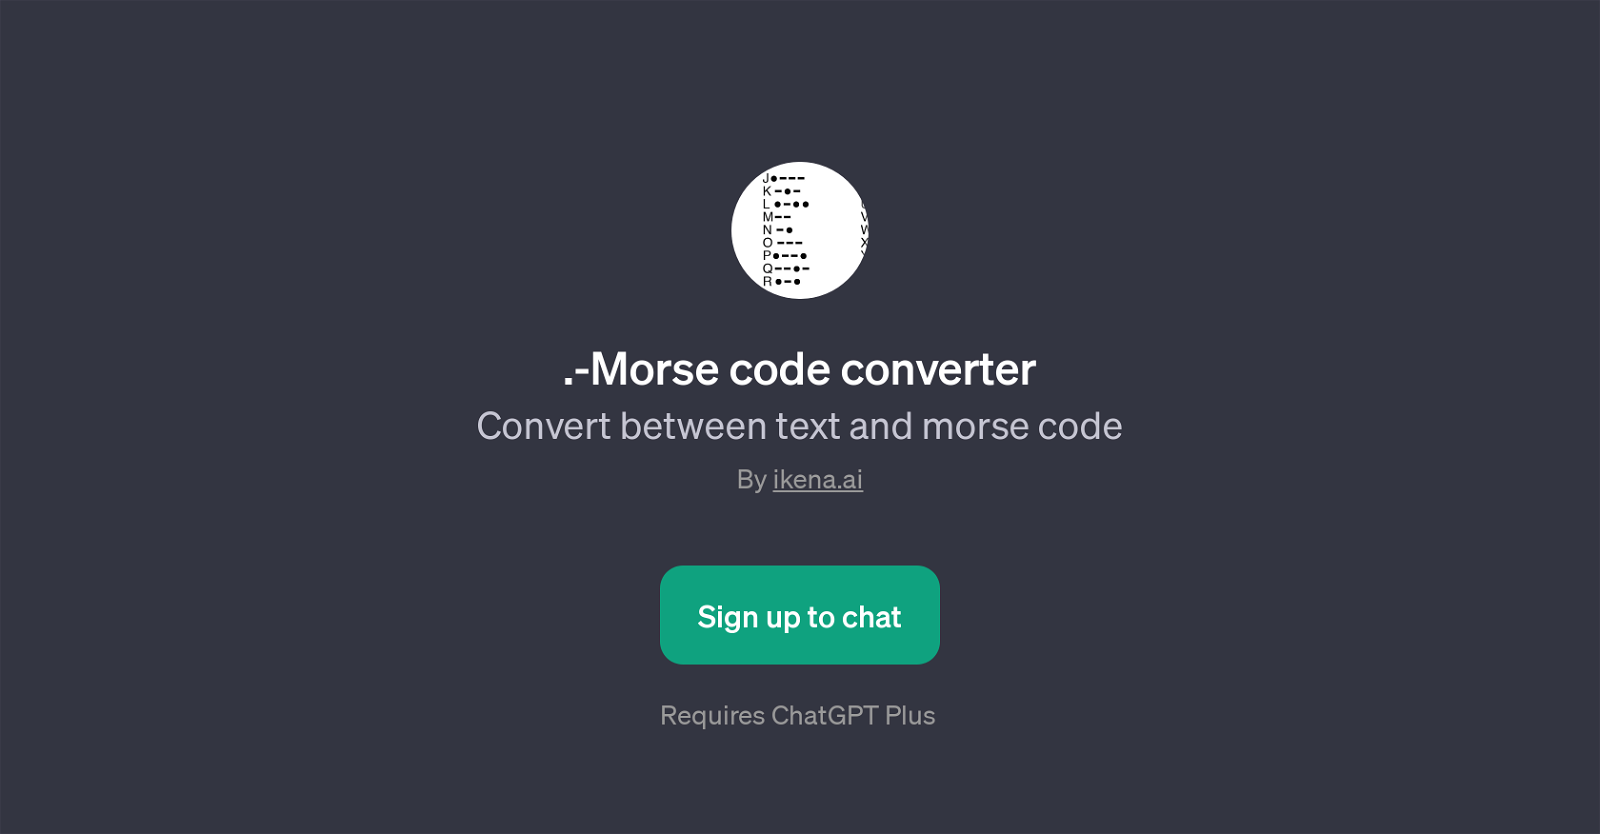 .-Morse code converter website